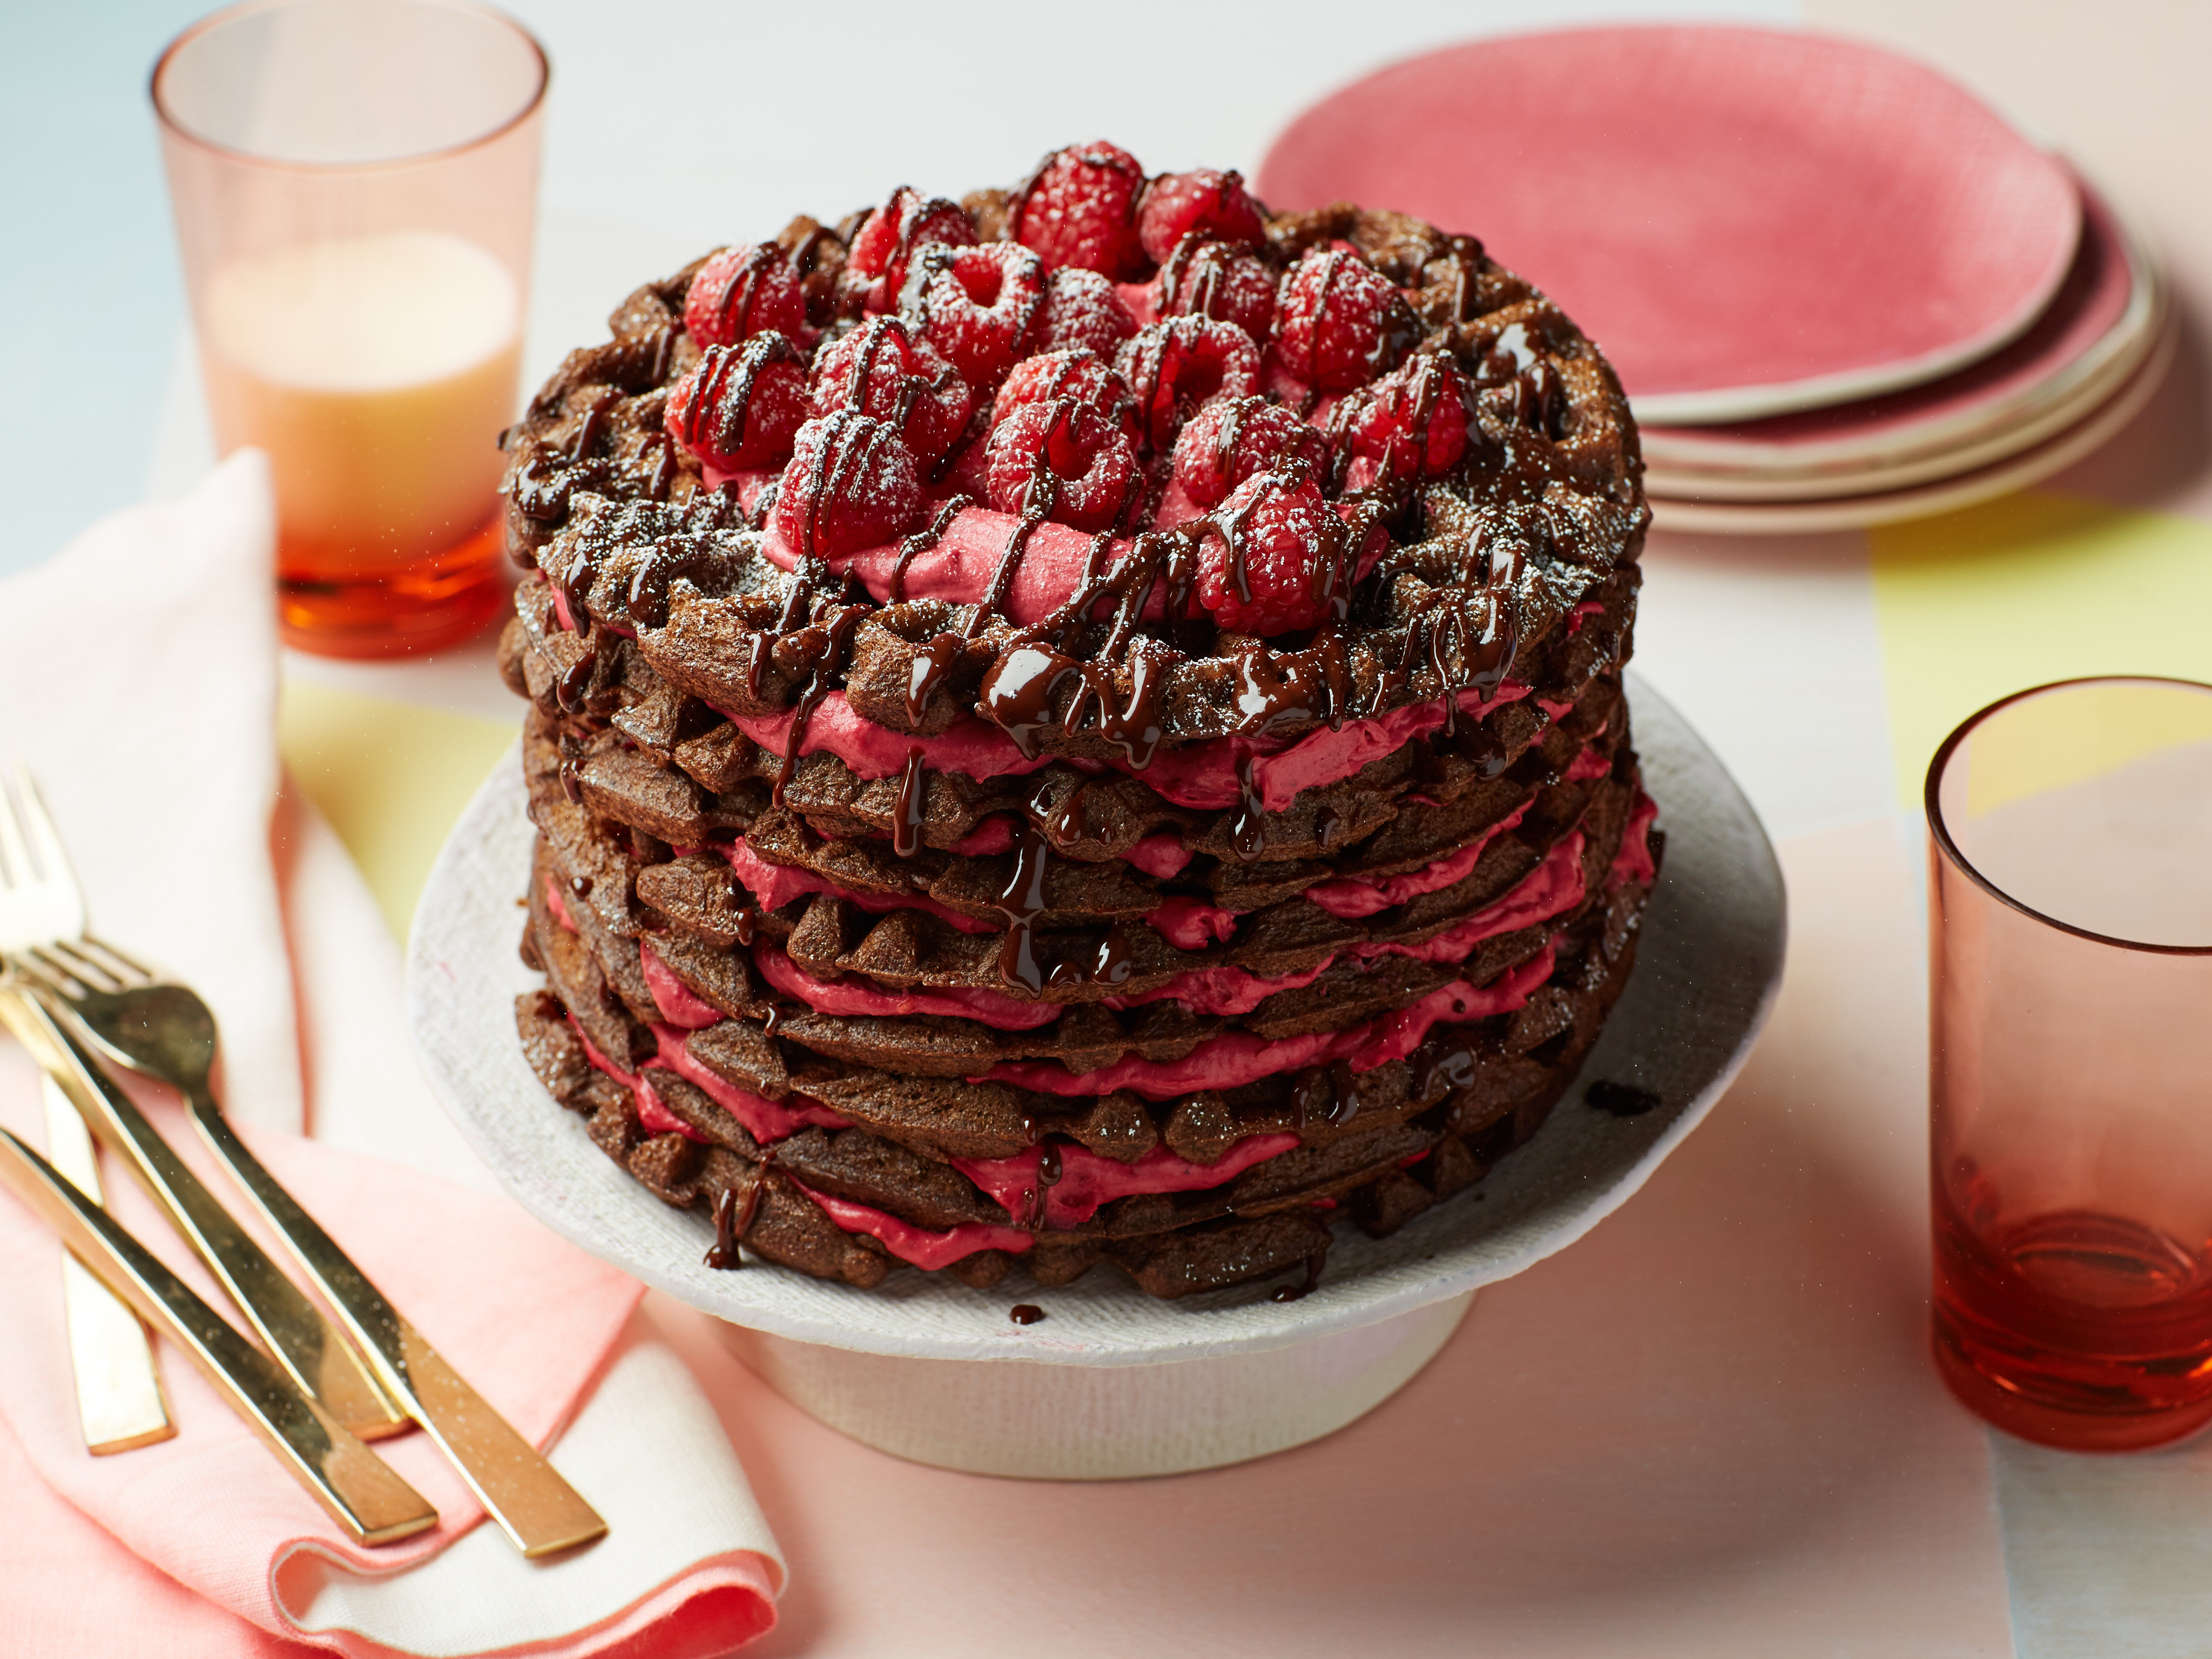 Chocolate Raspberry Cake with Whipped Chocolate Ganache